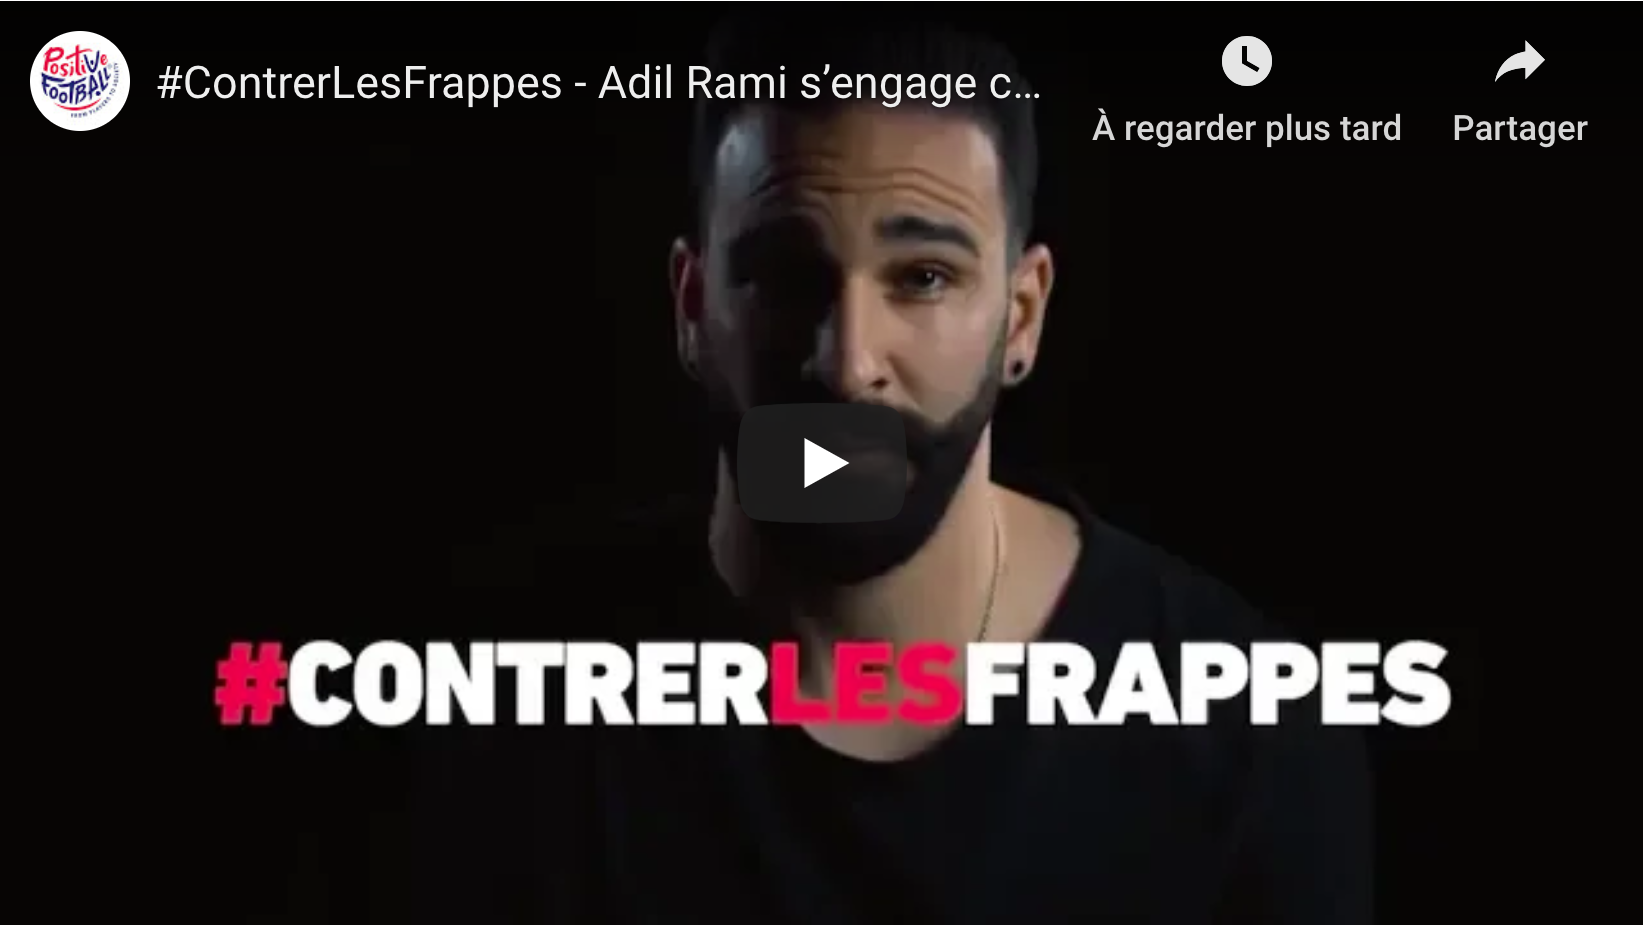 Presse_Film_publicitaire_Positive_Football_Campagne_Violences_Rami_#CONTRERLESFRAPPES